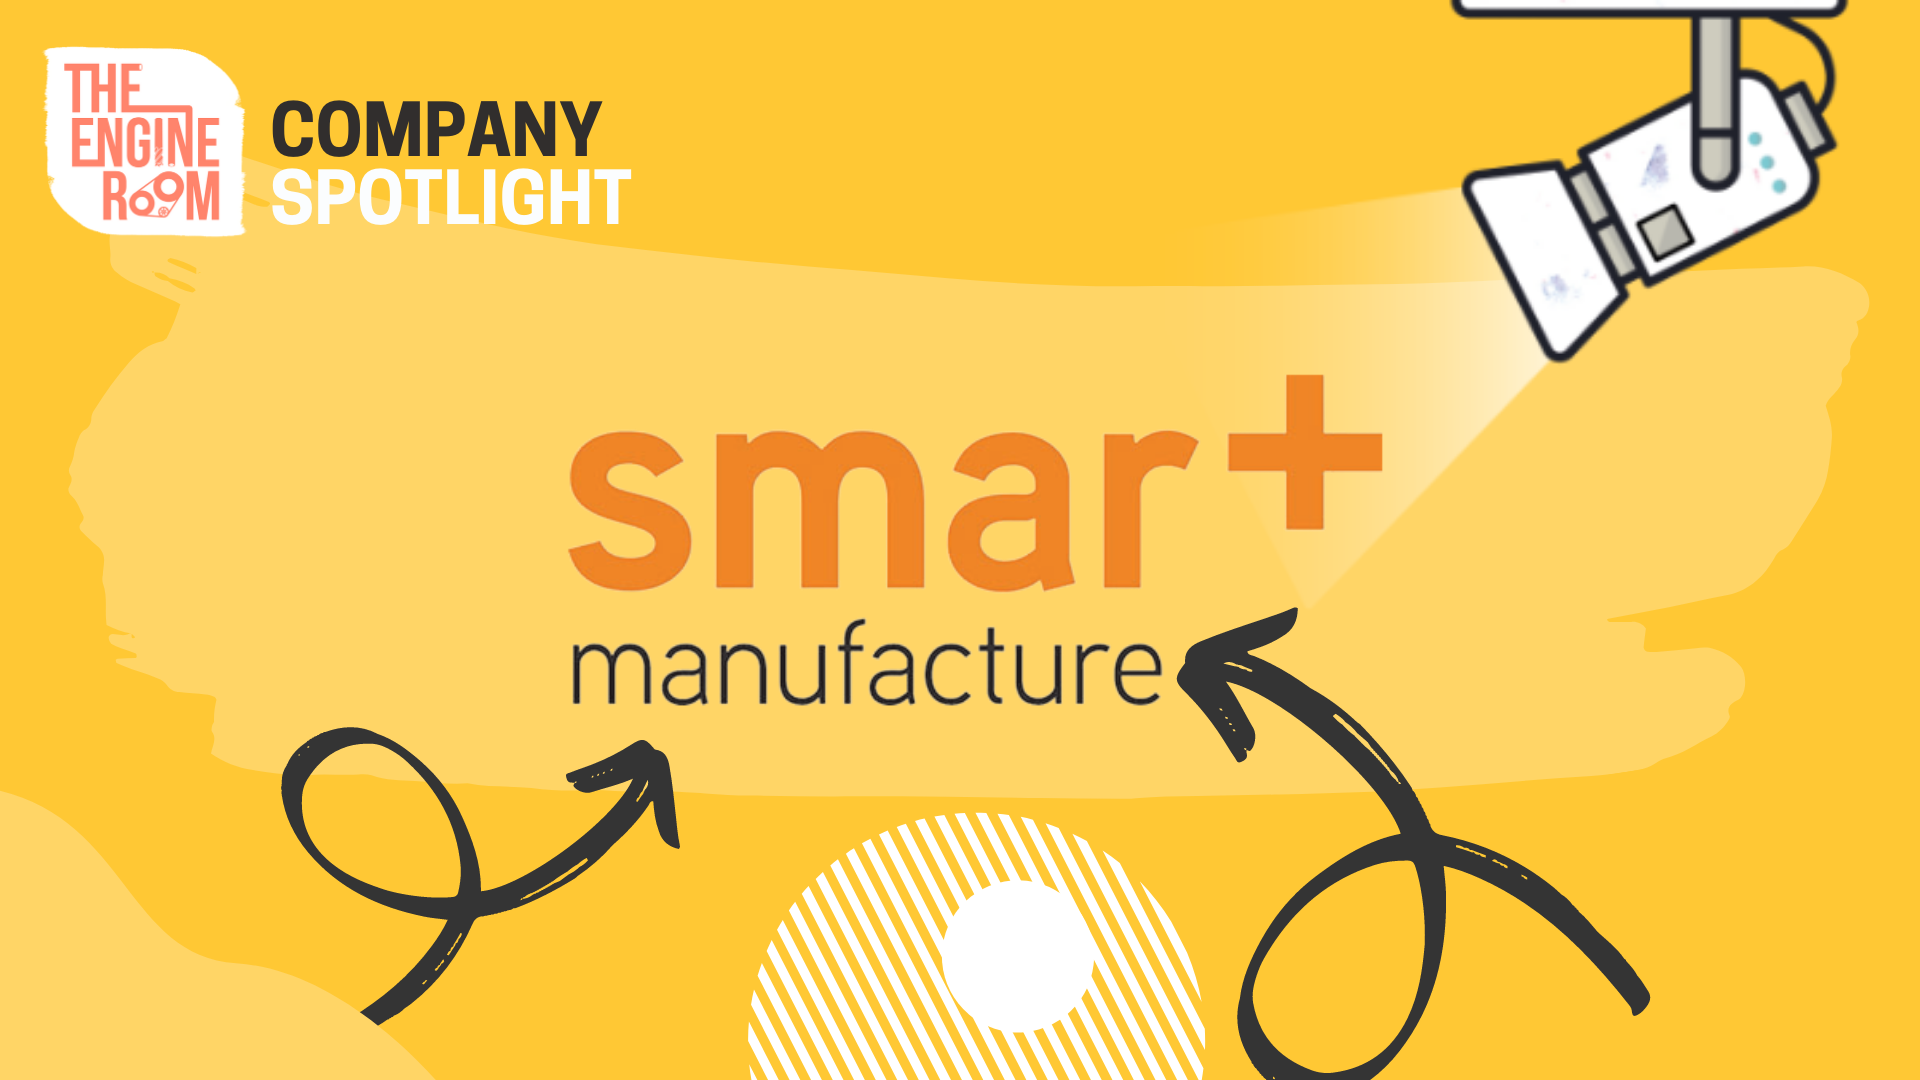 THE ENGINE ROOM - Company Spotlight - Sara Duff Smart Manufacture